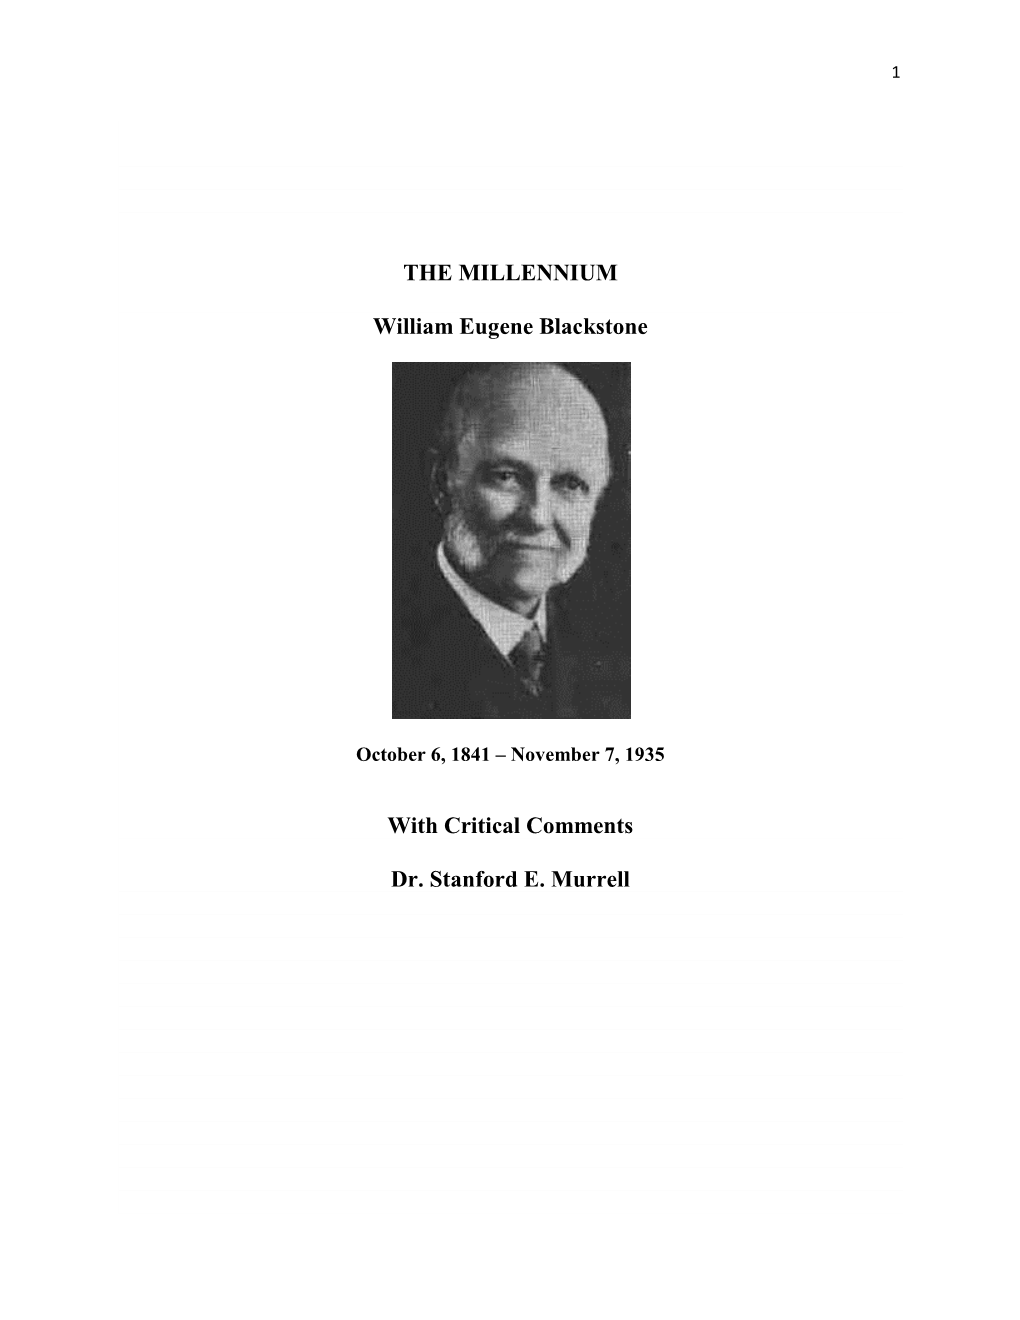 THE MILLENNIUM William Eugene Blackstone with Critical Comments